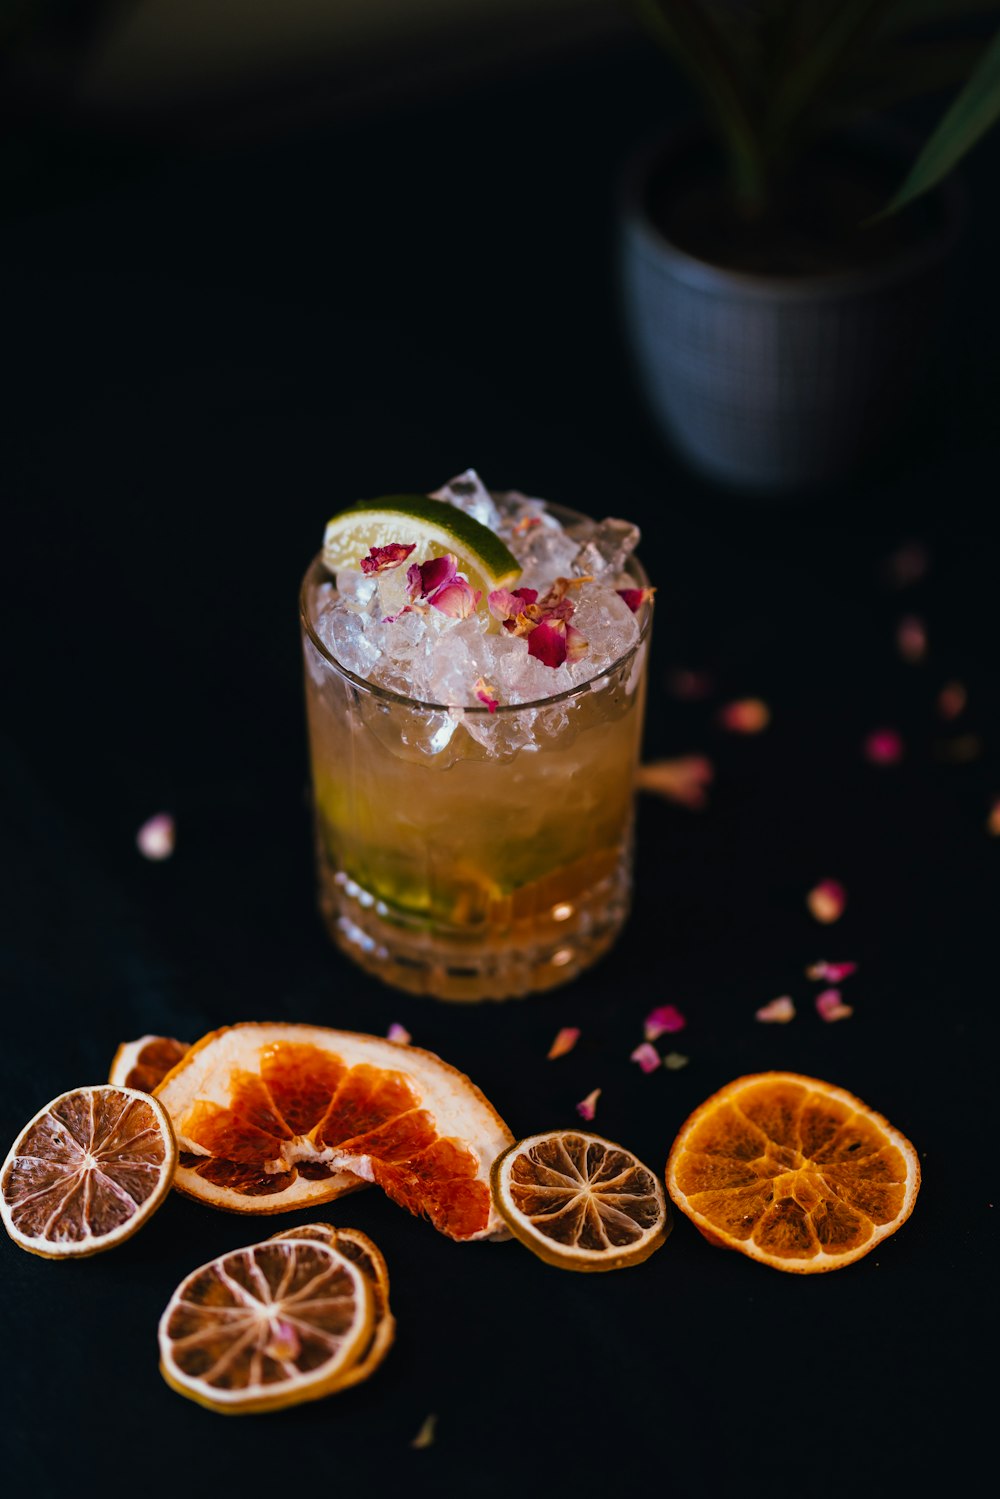 a cocktail with orange slices and a garnish garnish